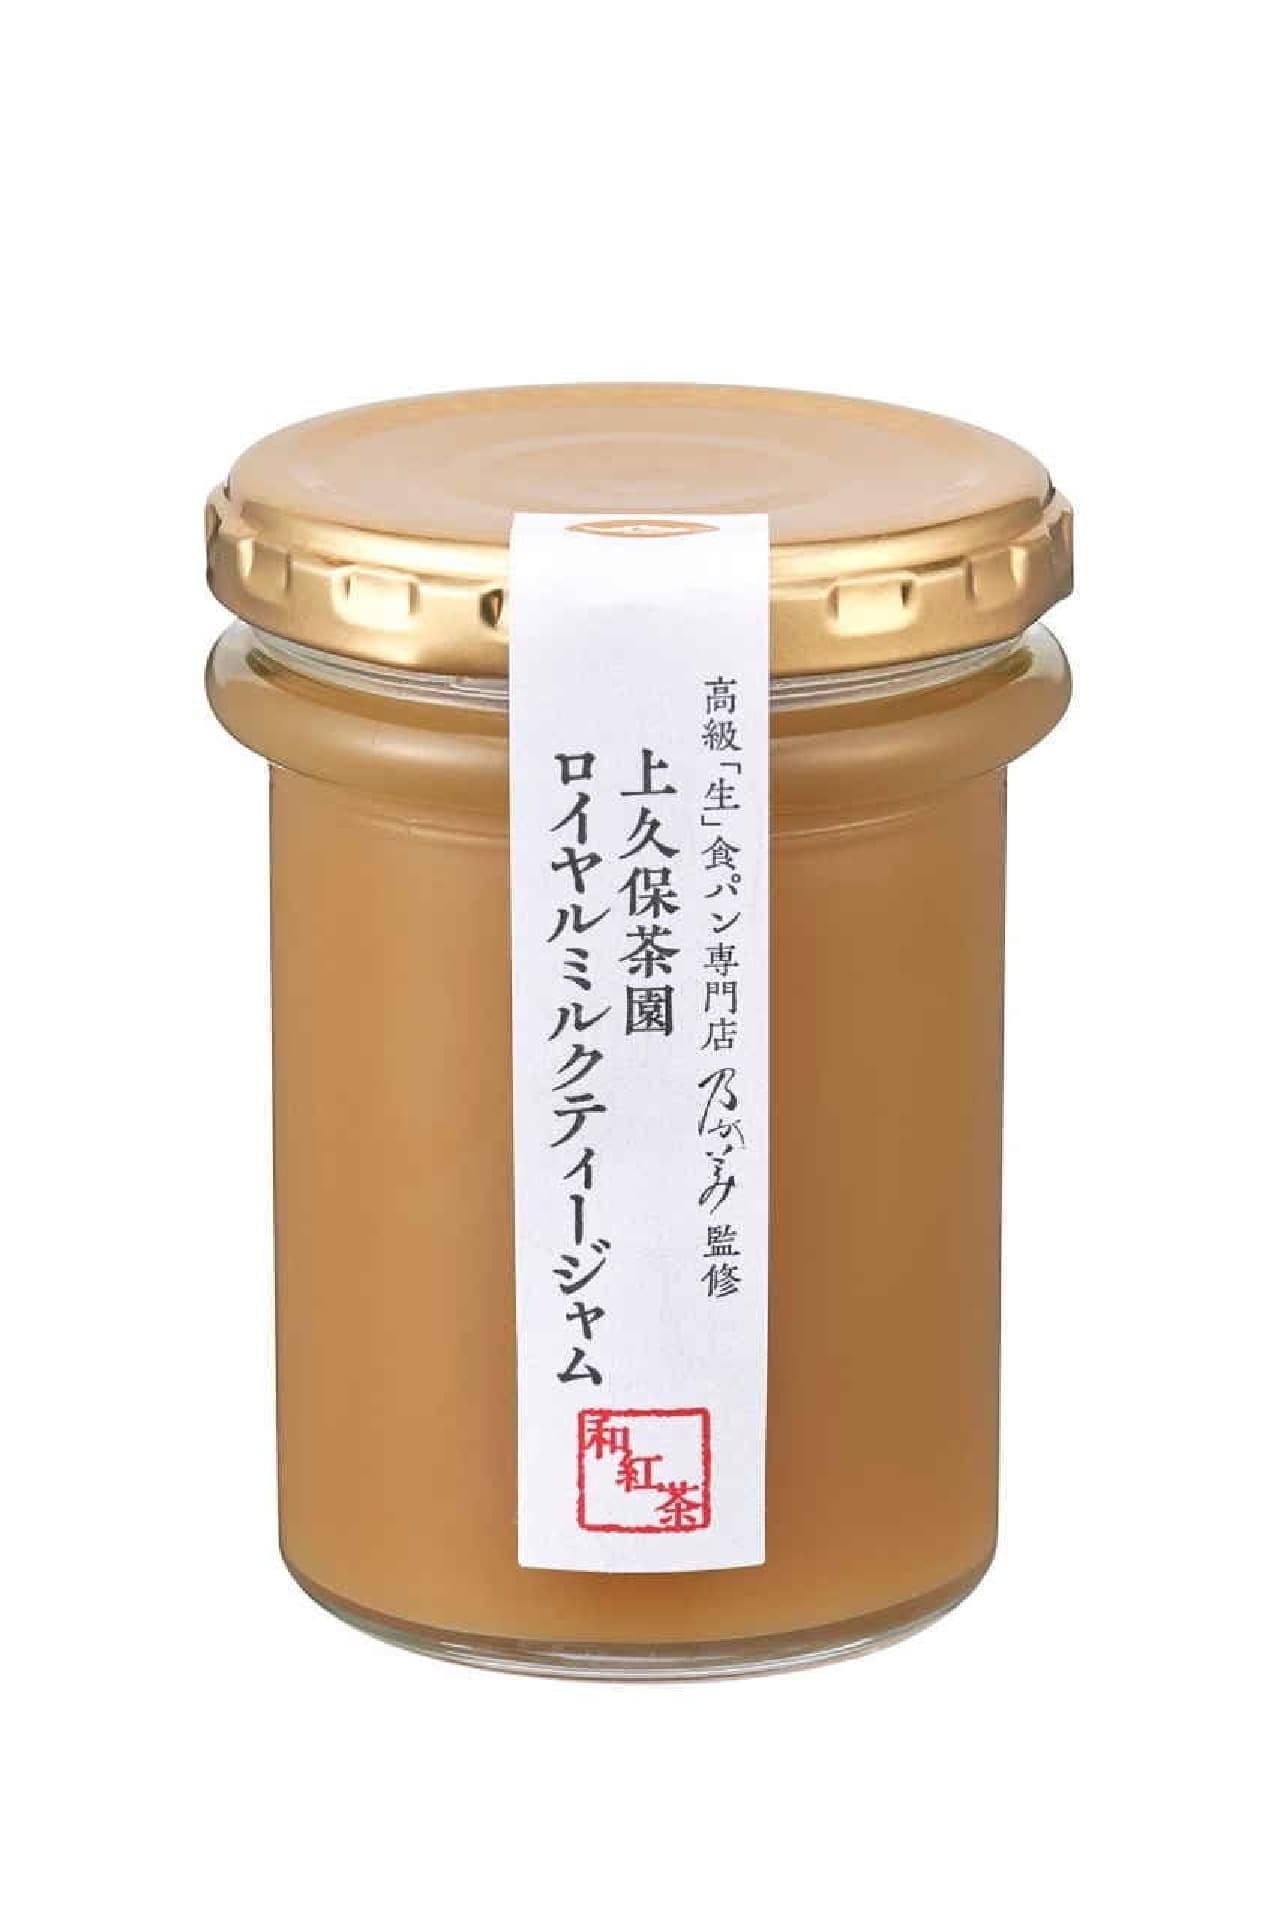 Nogami "Kamikubo Tea Garden Royal Milk Tea Jam